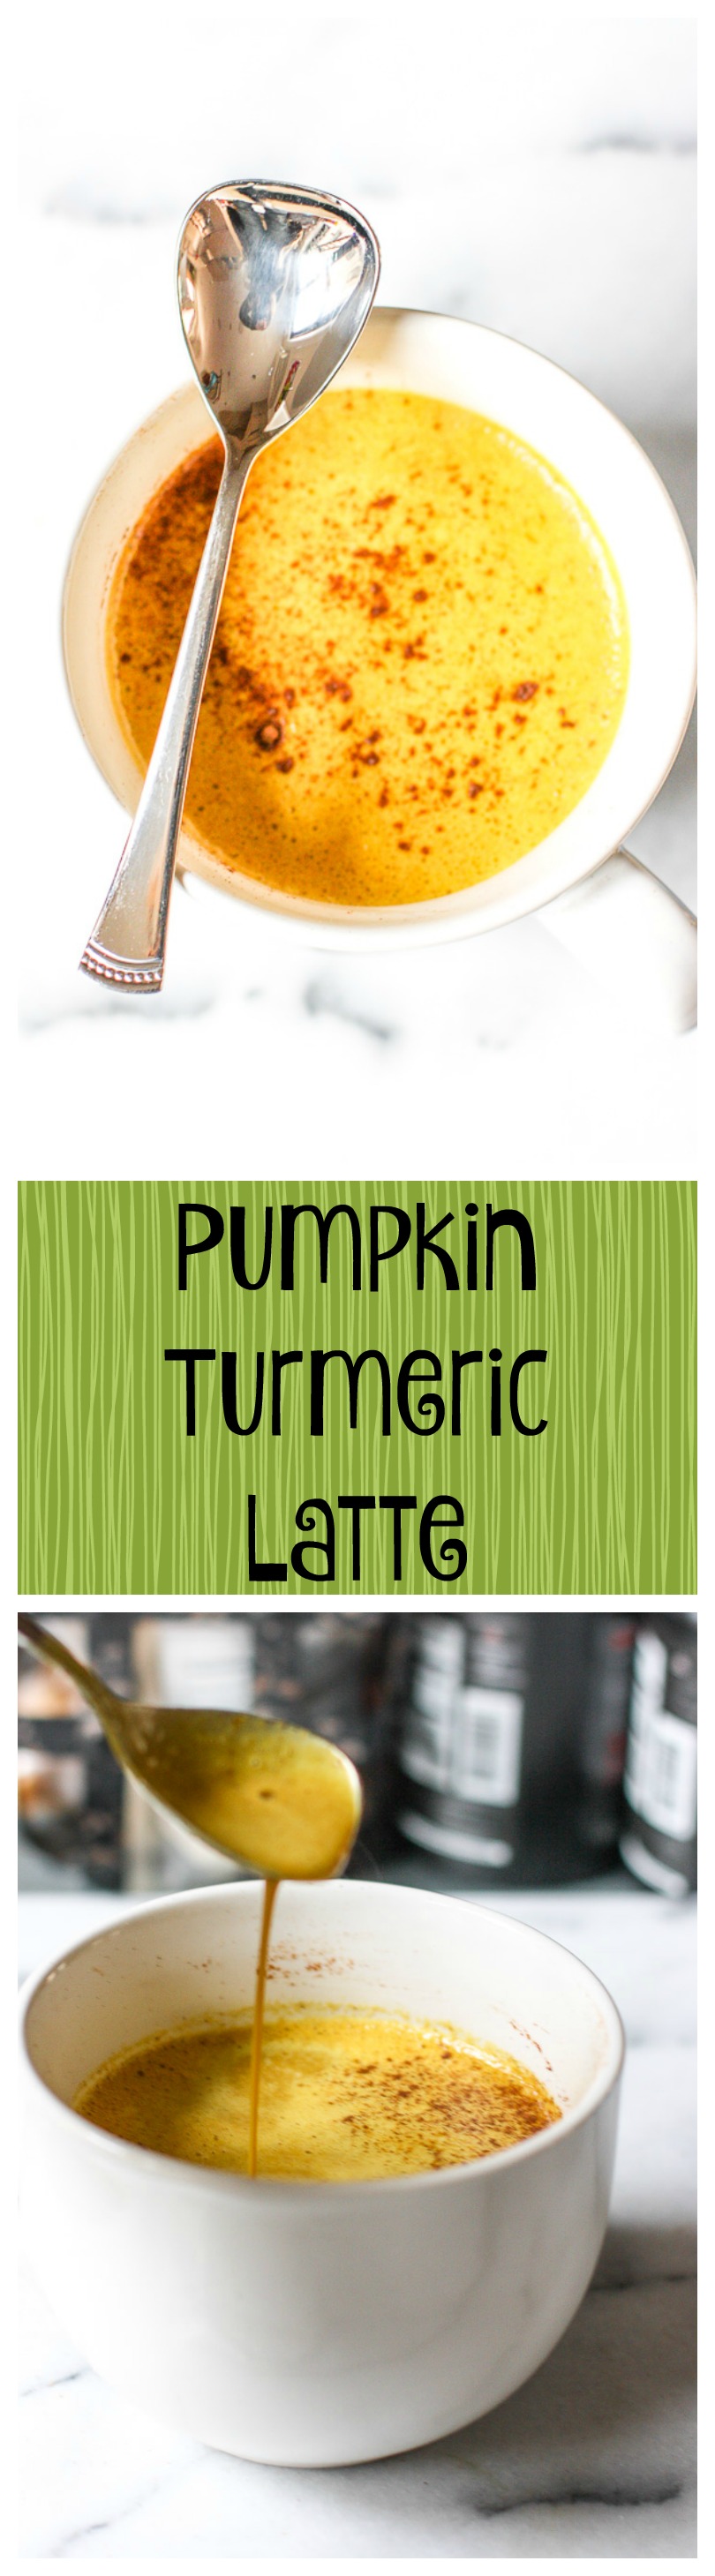 pumpkin turmeric latte